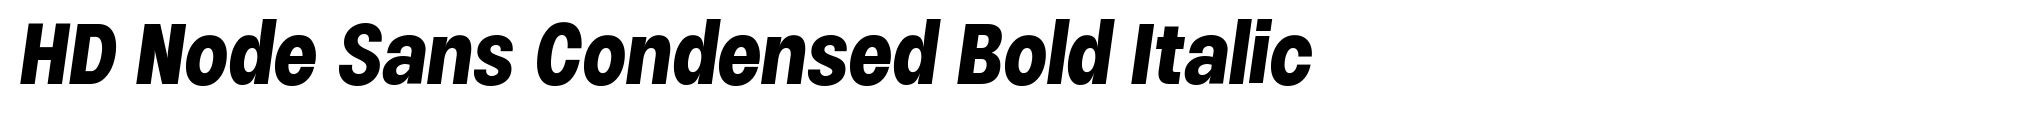 HD Node Sans Condensed Bold Italic image